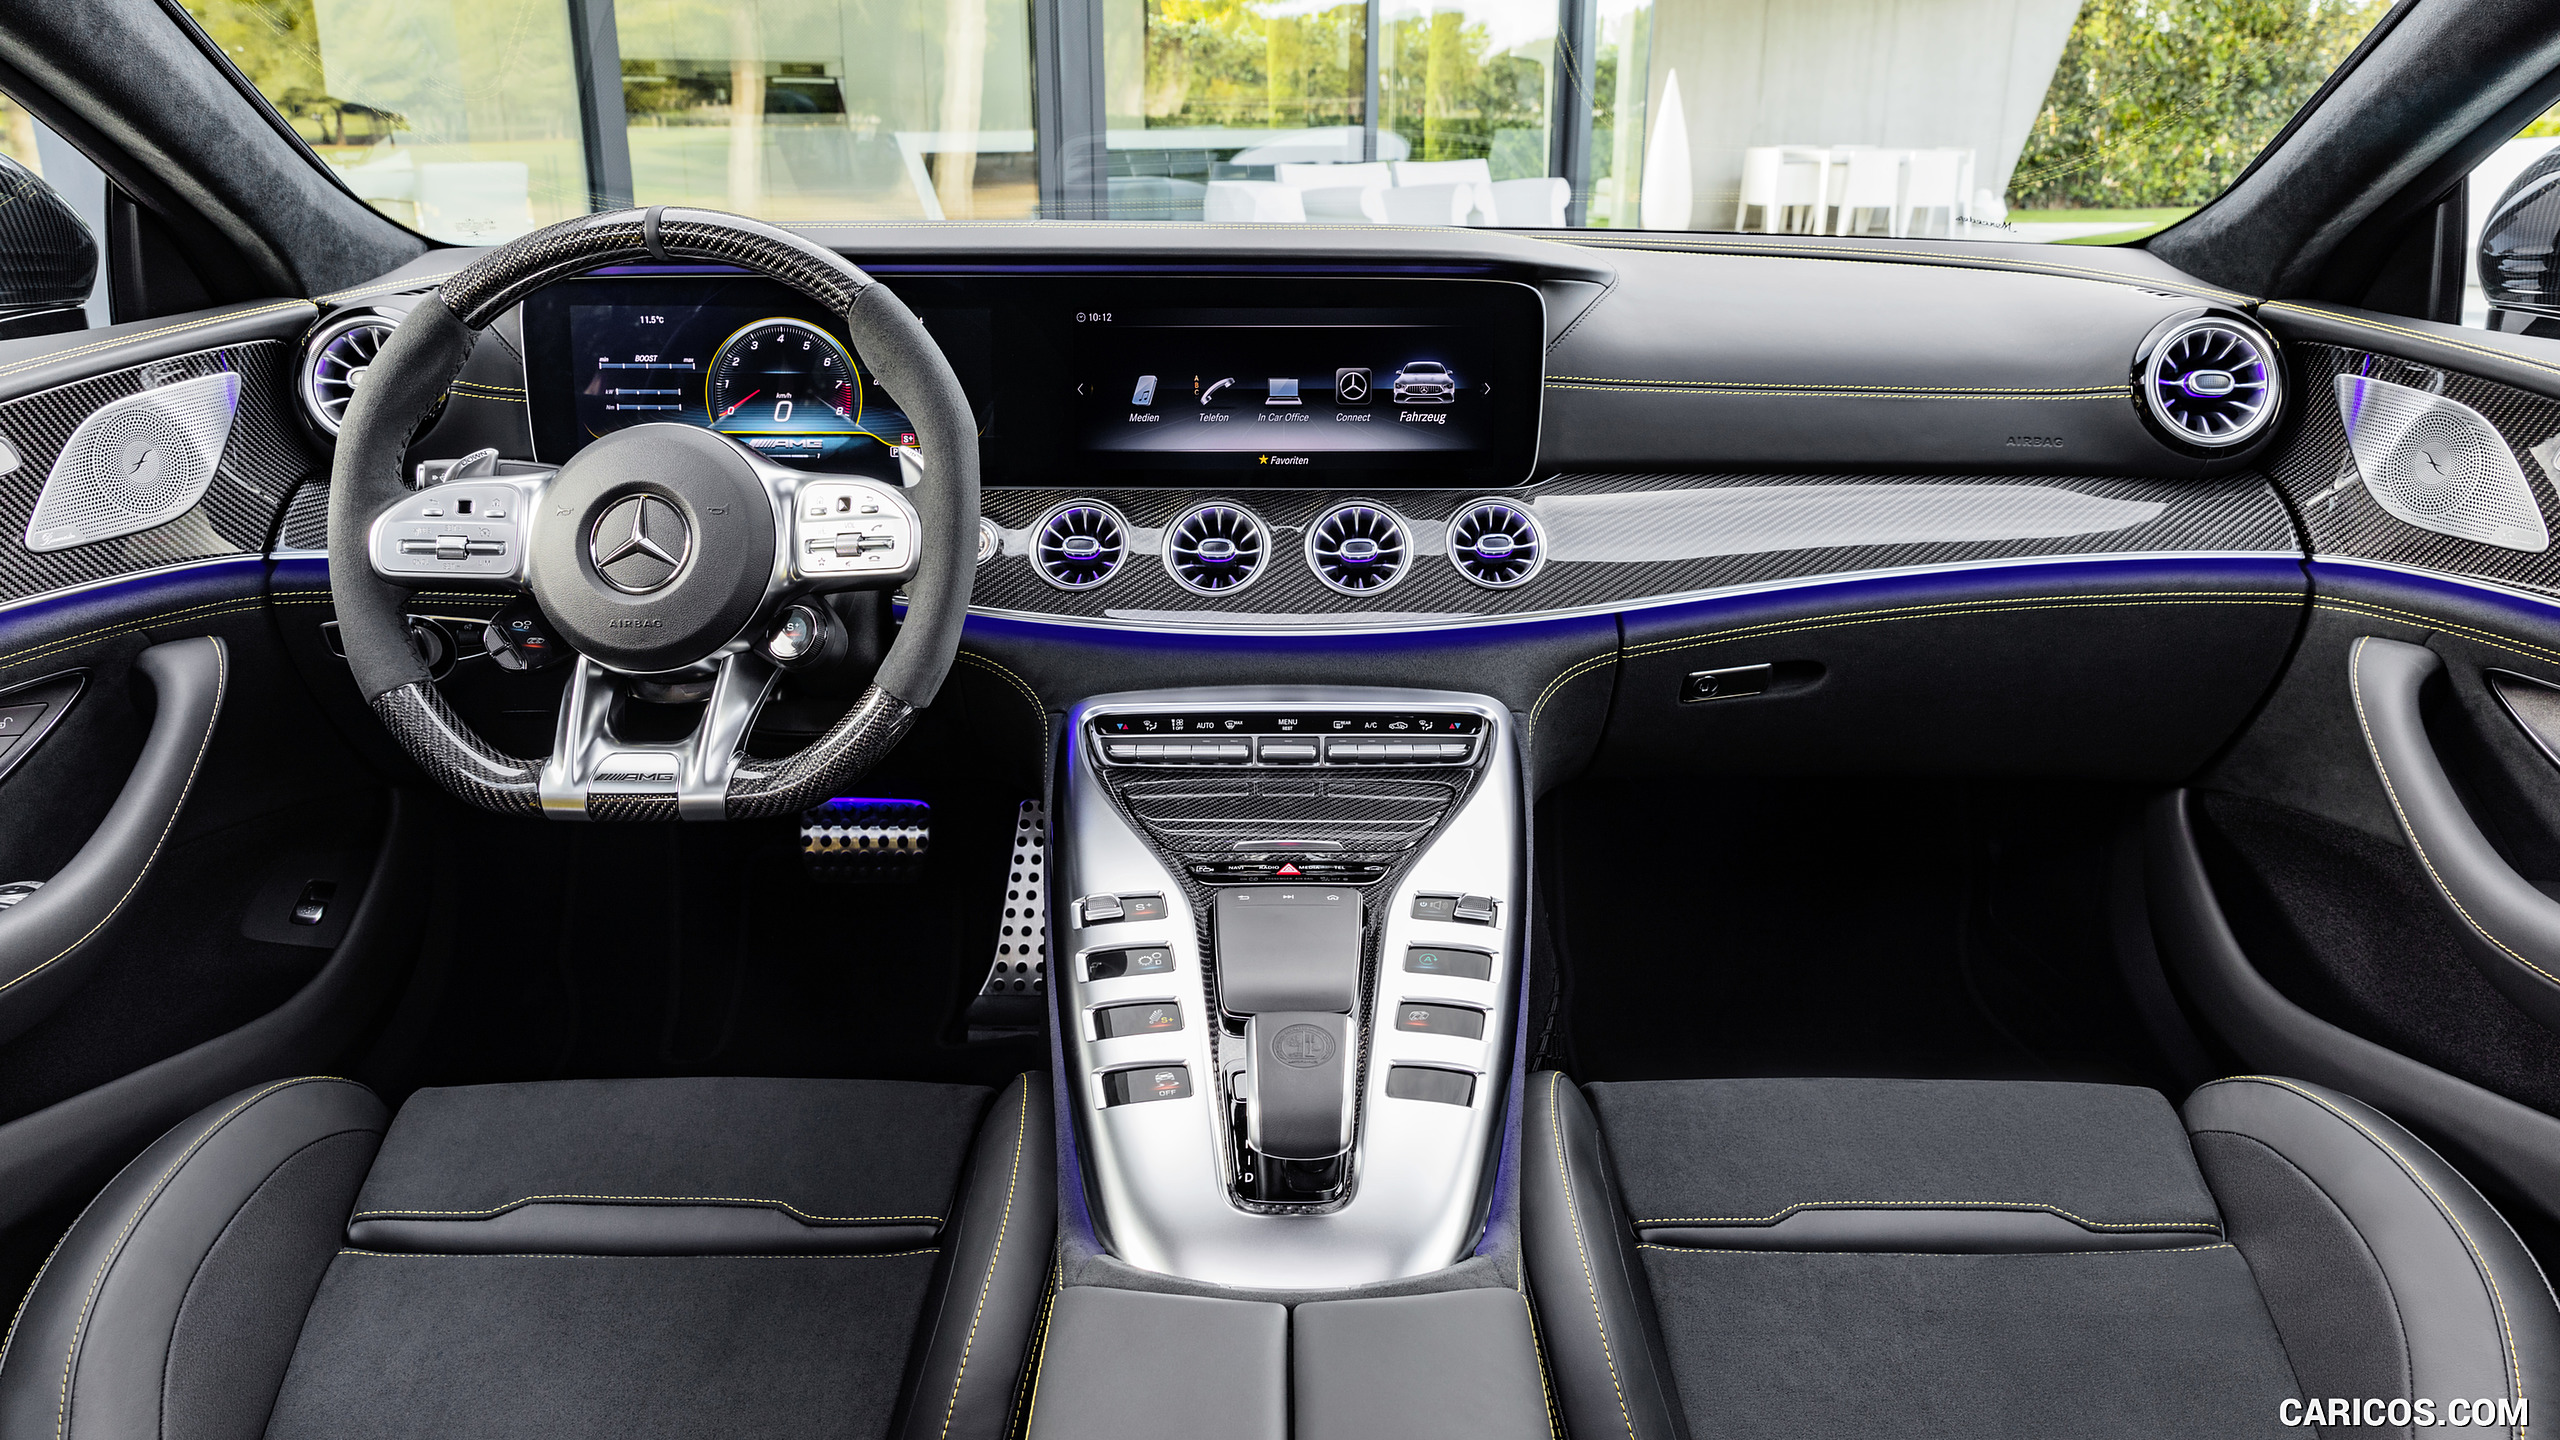 2019 Mercedes-AMG GT 63 S 4MATIC+ 4-Door Coupe - Interior, Cockpit, #35 of 427